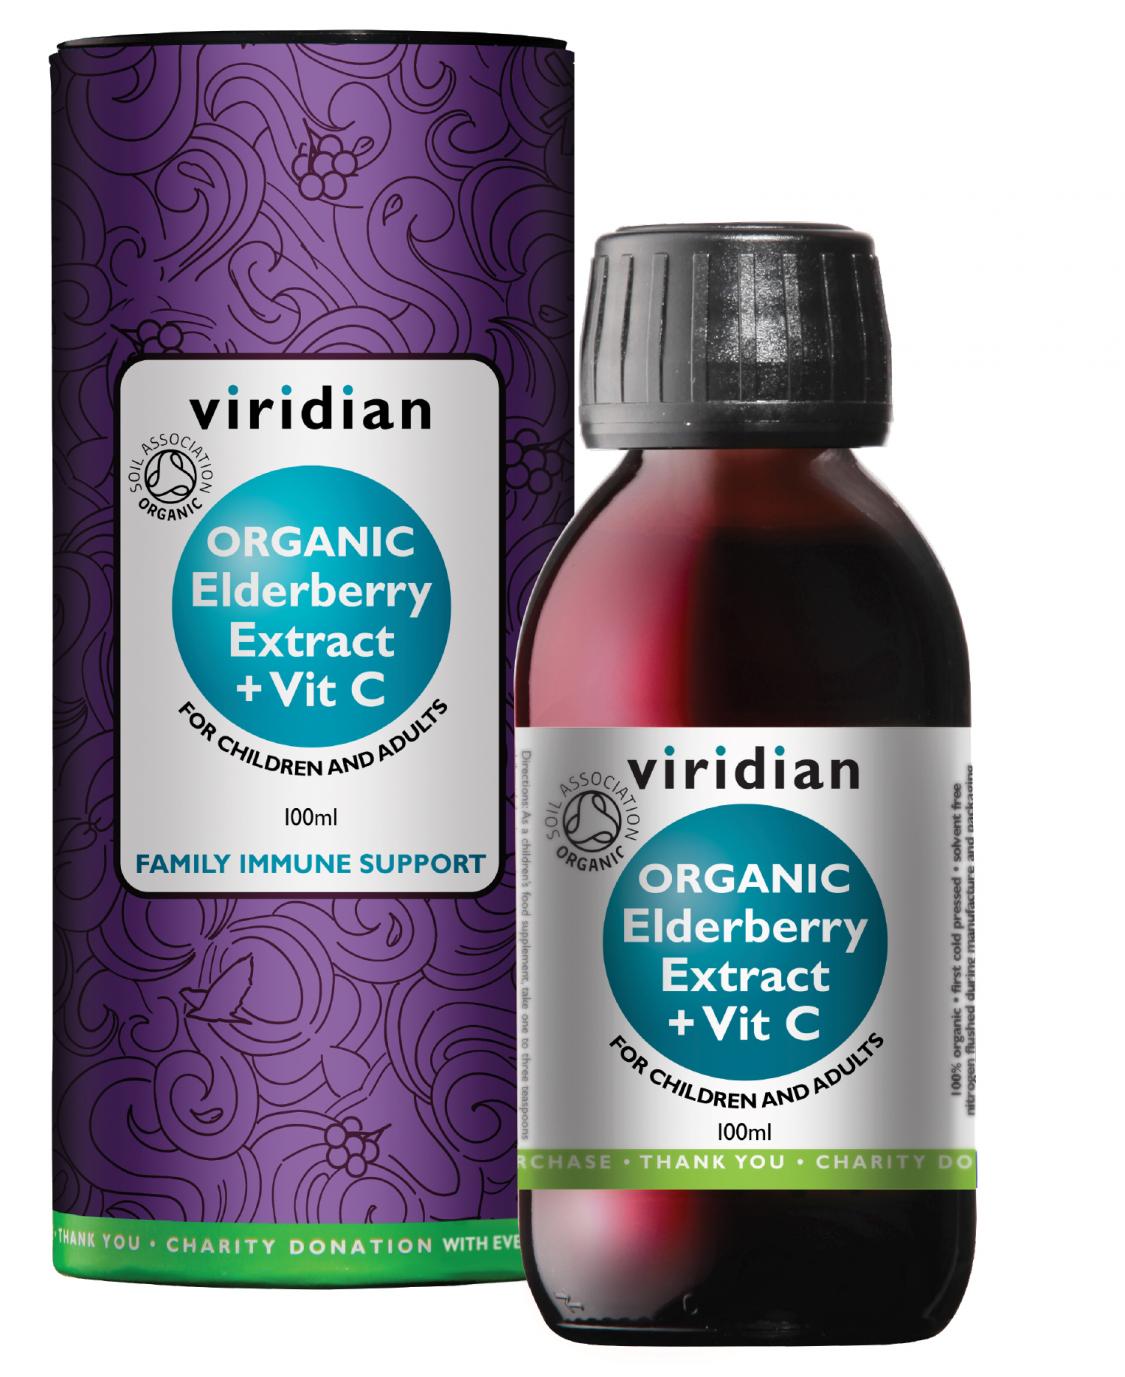 Viridian Organic Elderberry Extract + Vit C 100ml